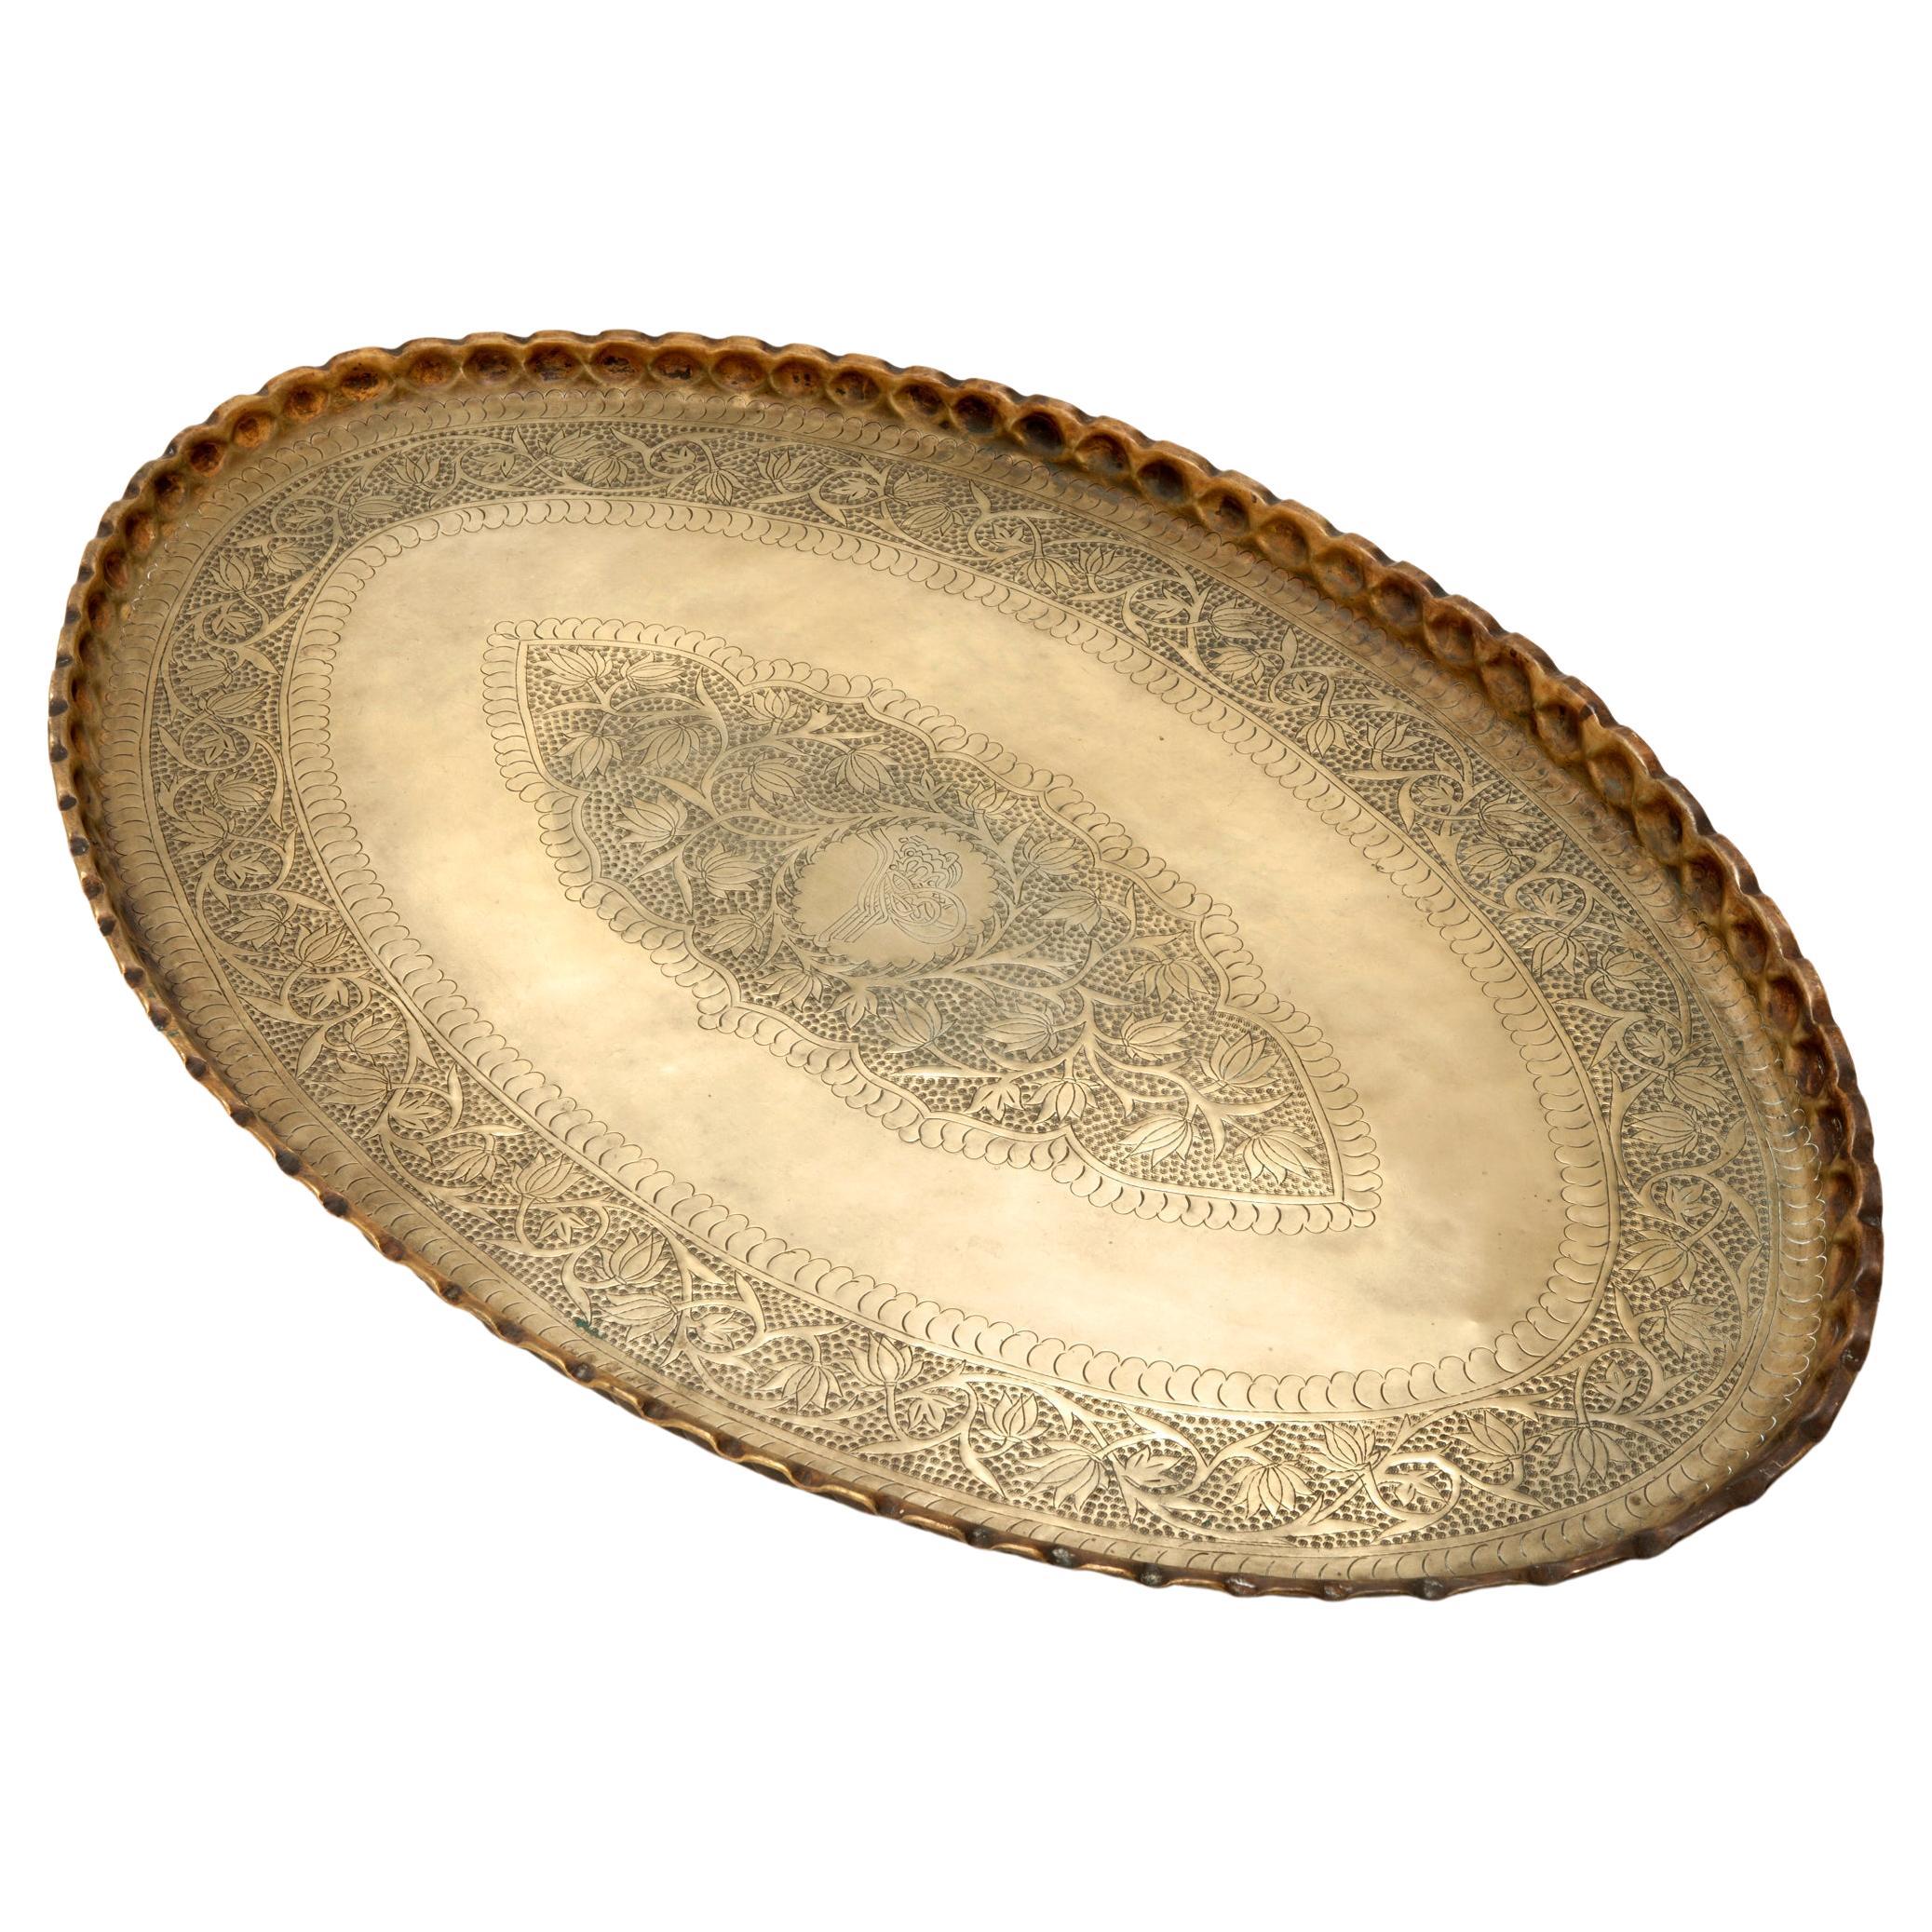 Handgearbeitetes marokkanisches geätztes großes ovales Tablett aus Messing